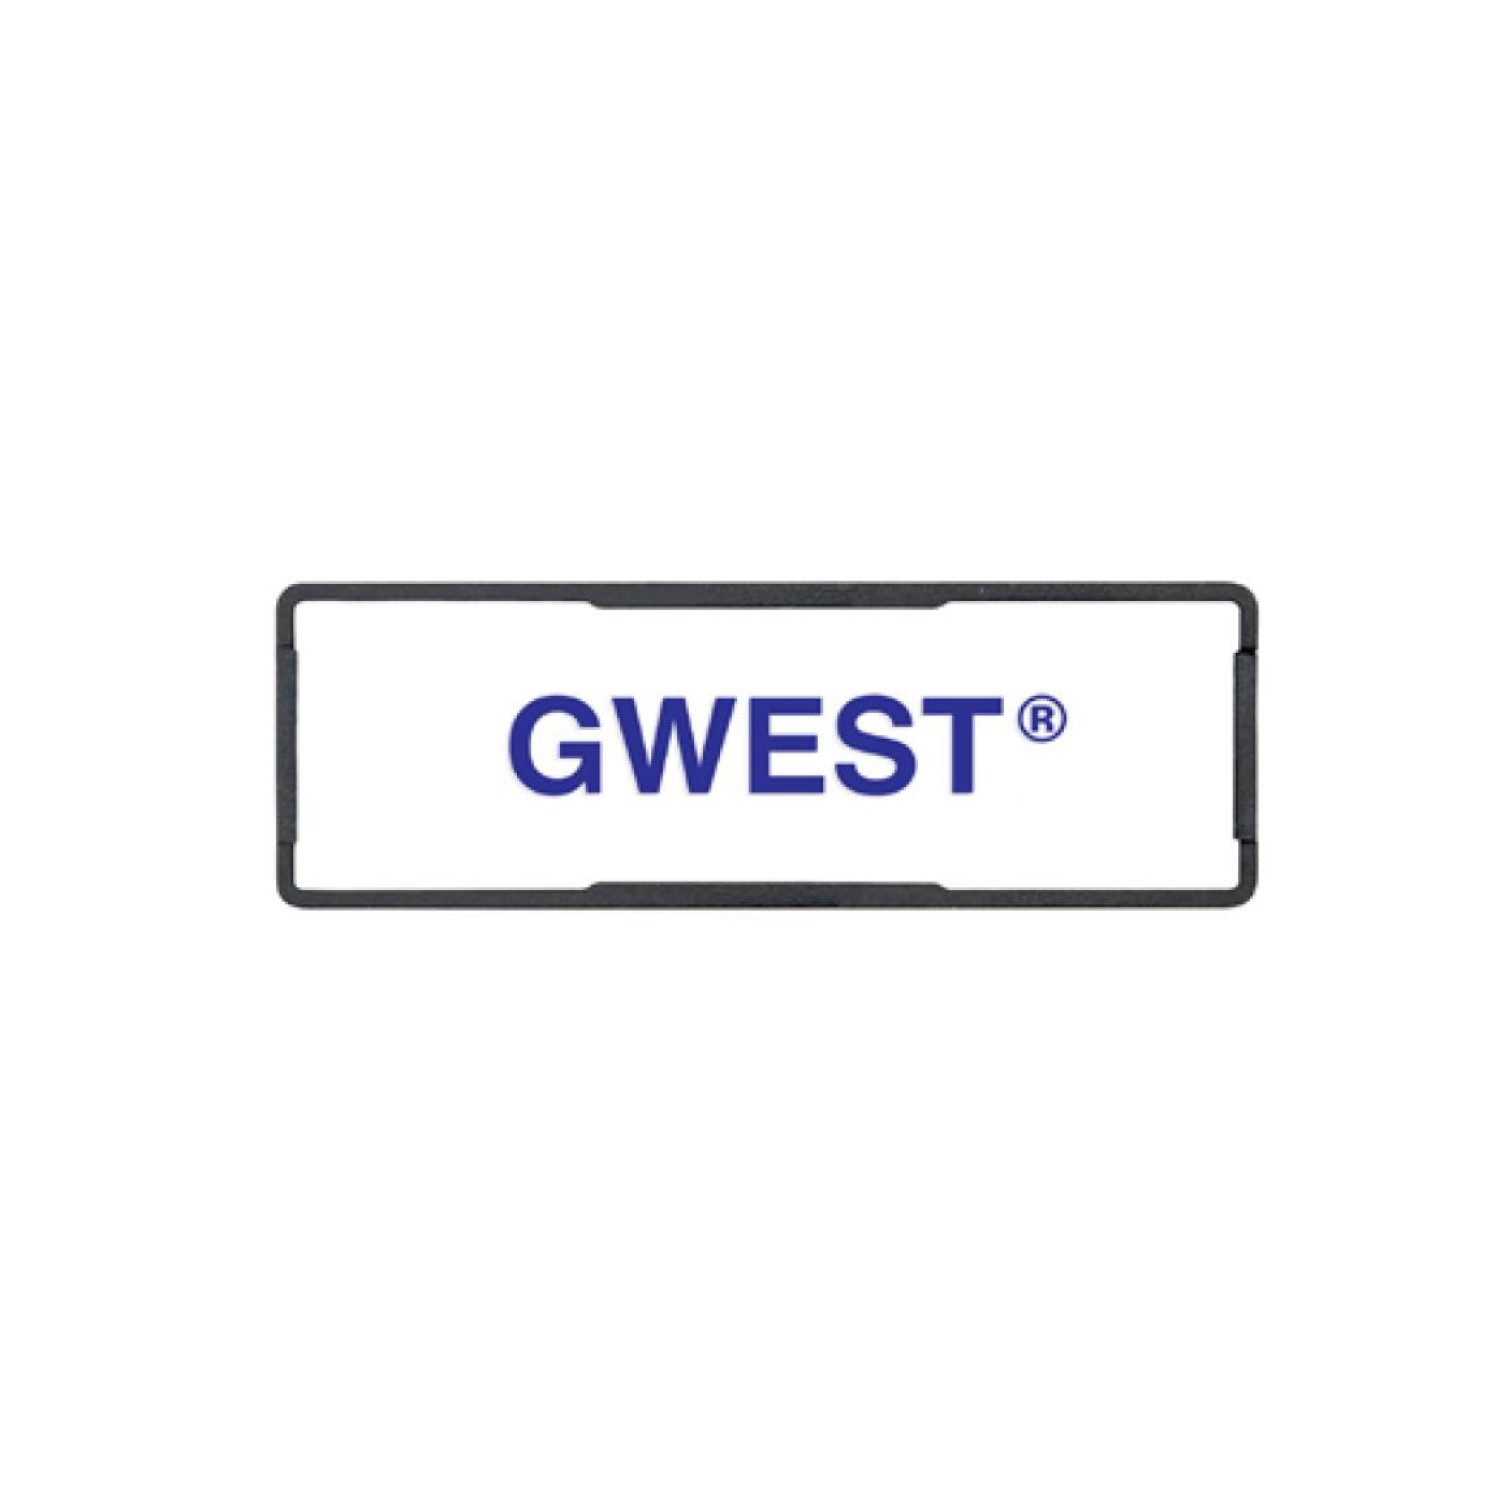 Gwest Pano Etiketi - GPET 2 - 25 Adet